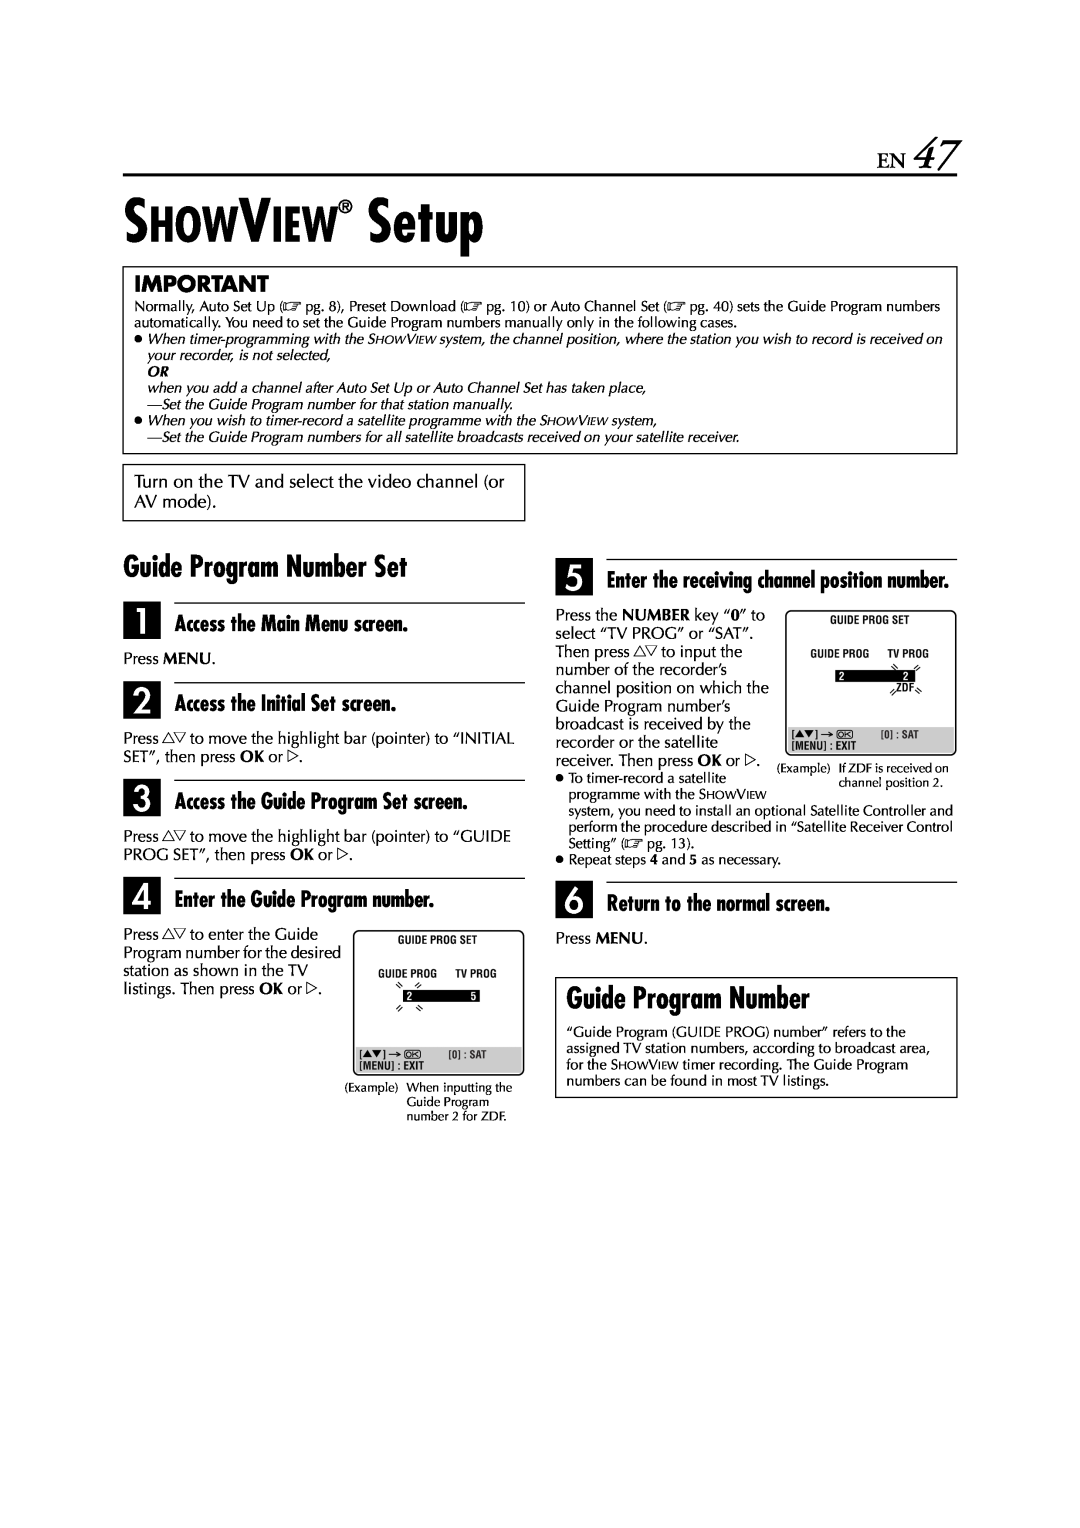 JVC HR-J674EU SHOWVIEW Setup, Guide Program Number Set, B Access the Initial Set screen, D Enter the Guide Program number 